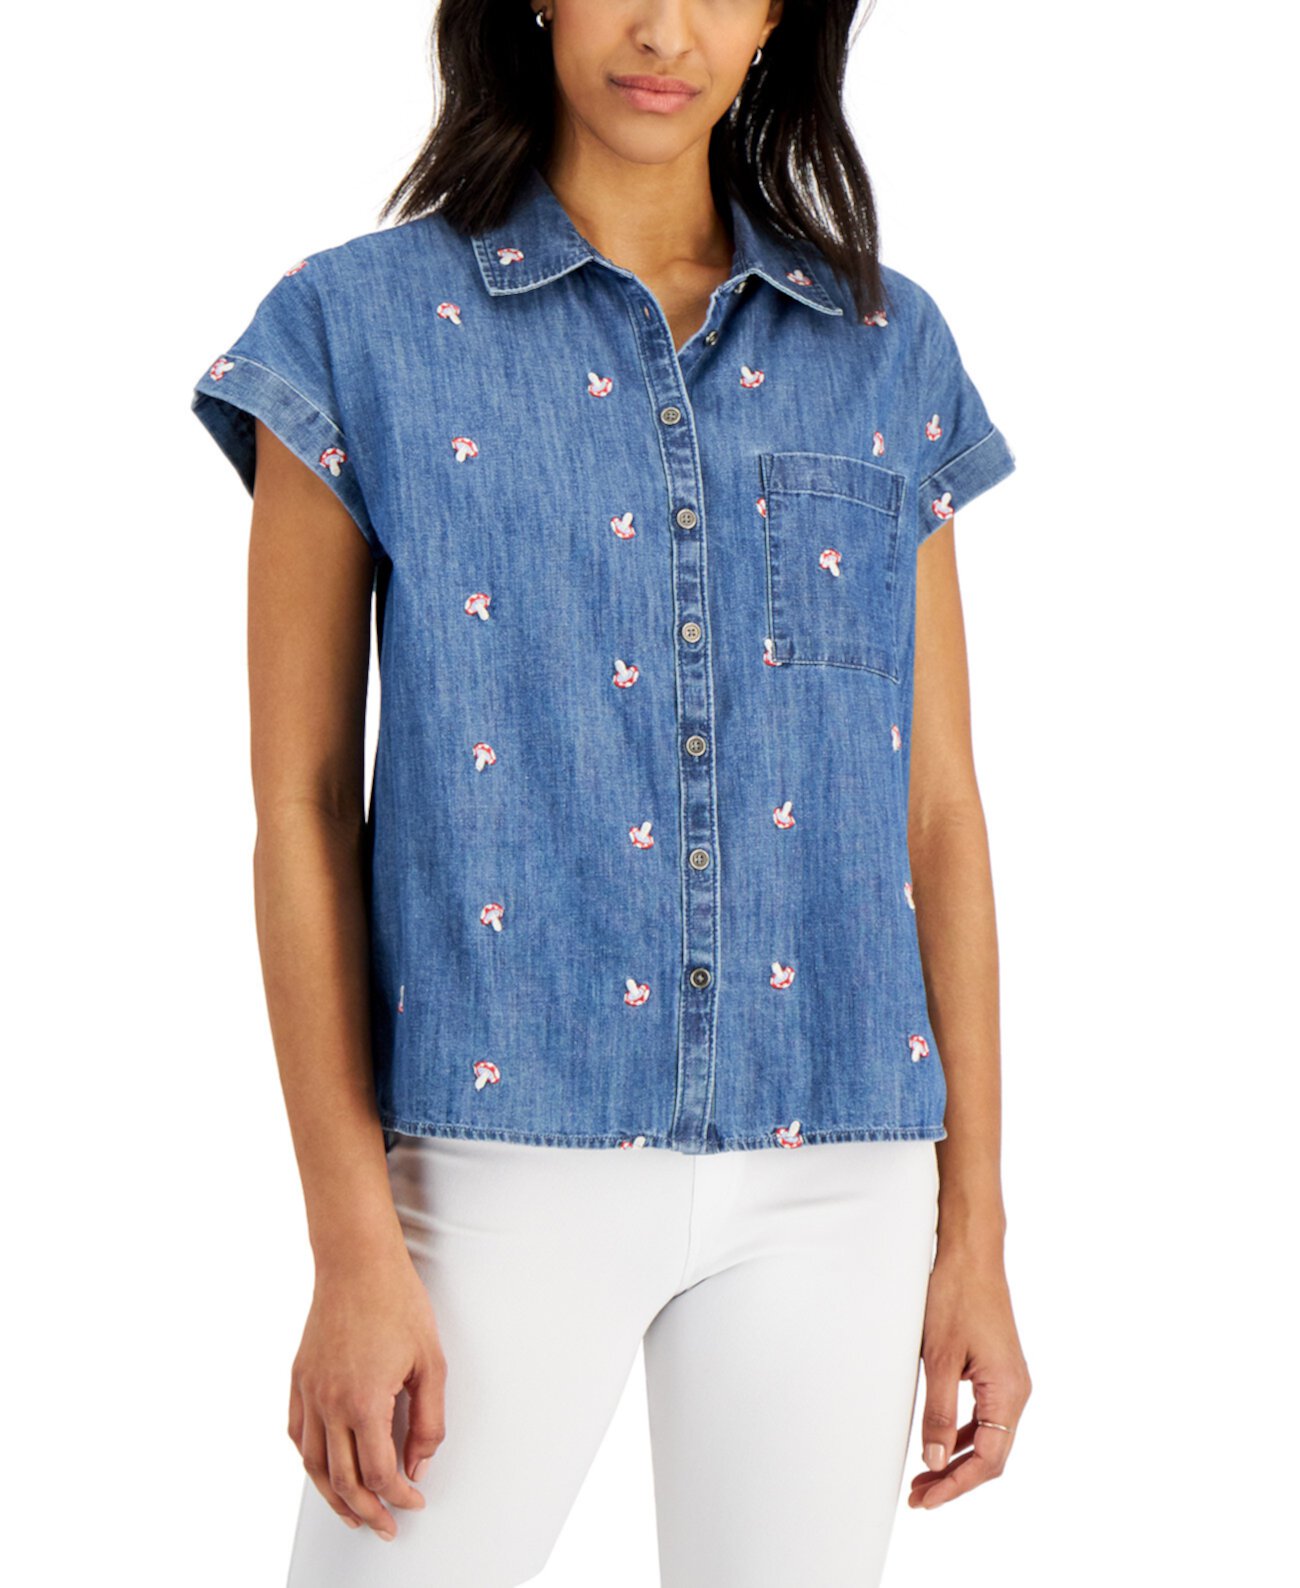 Рубашка Petite с вышивкой Mushroom Camp, созданная для Macy's Style & Co